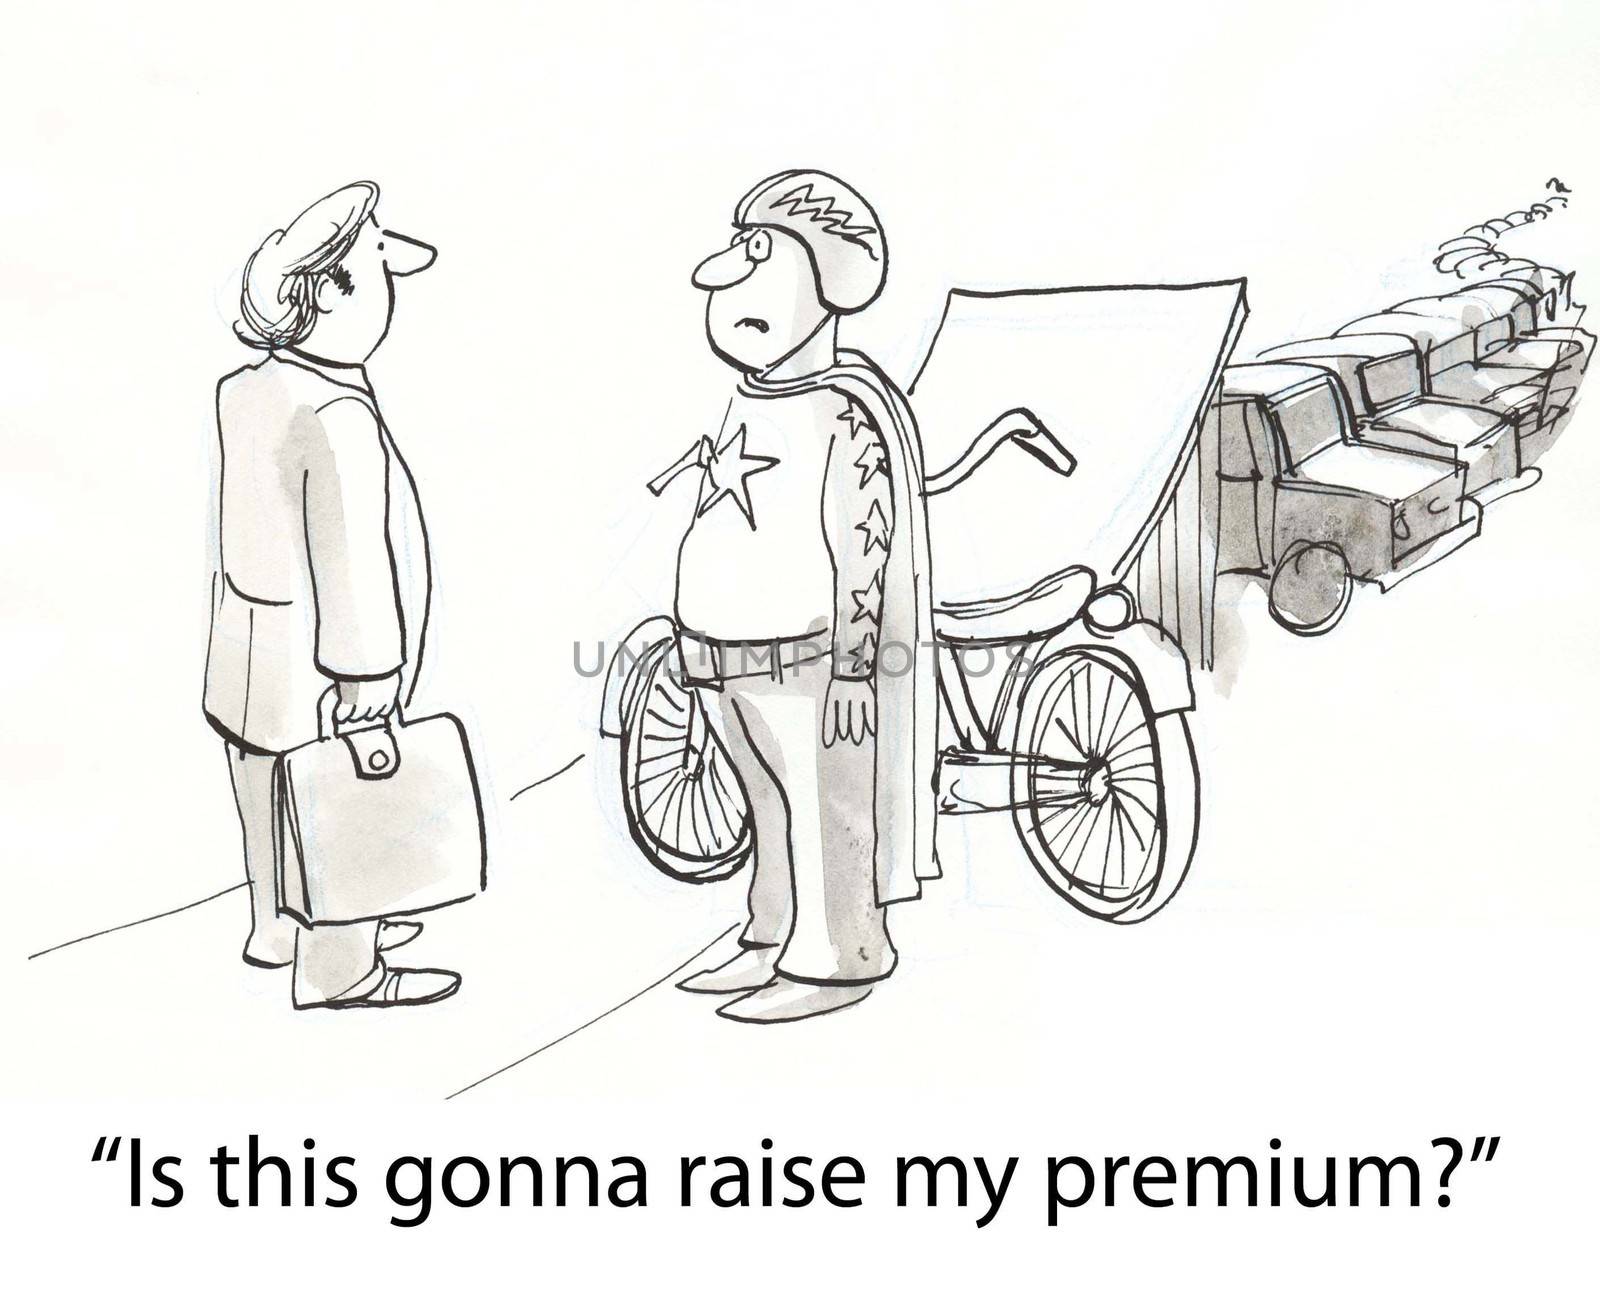 "Is this gonna raise my premium?"